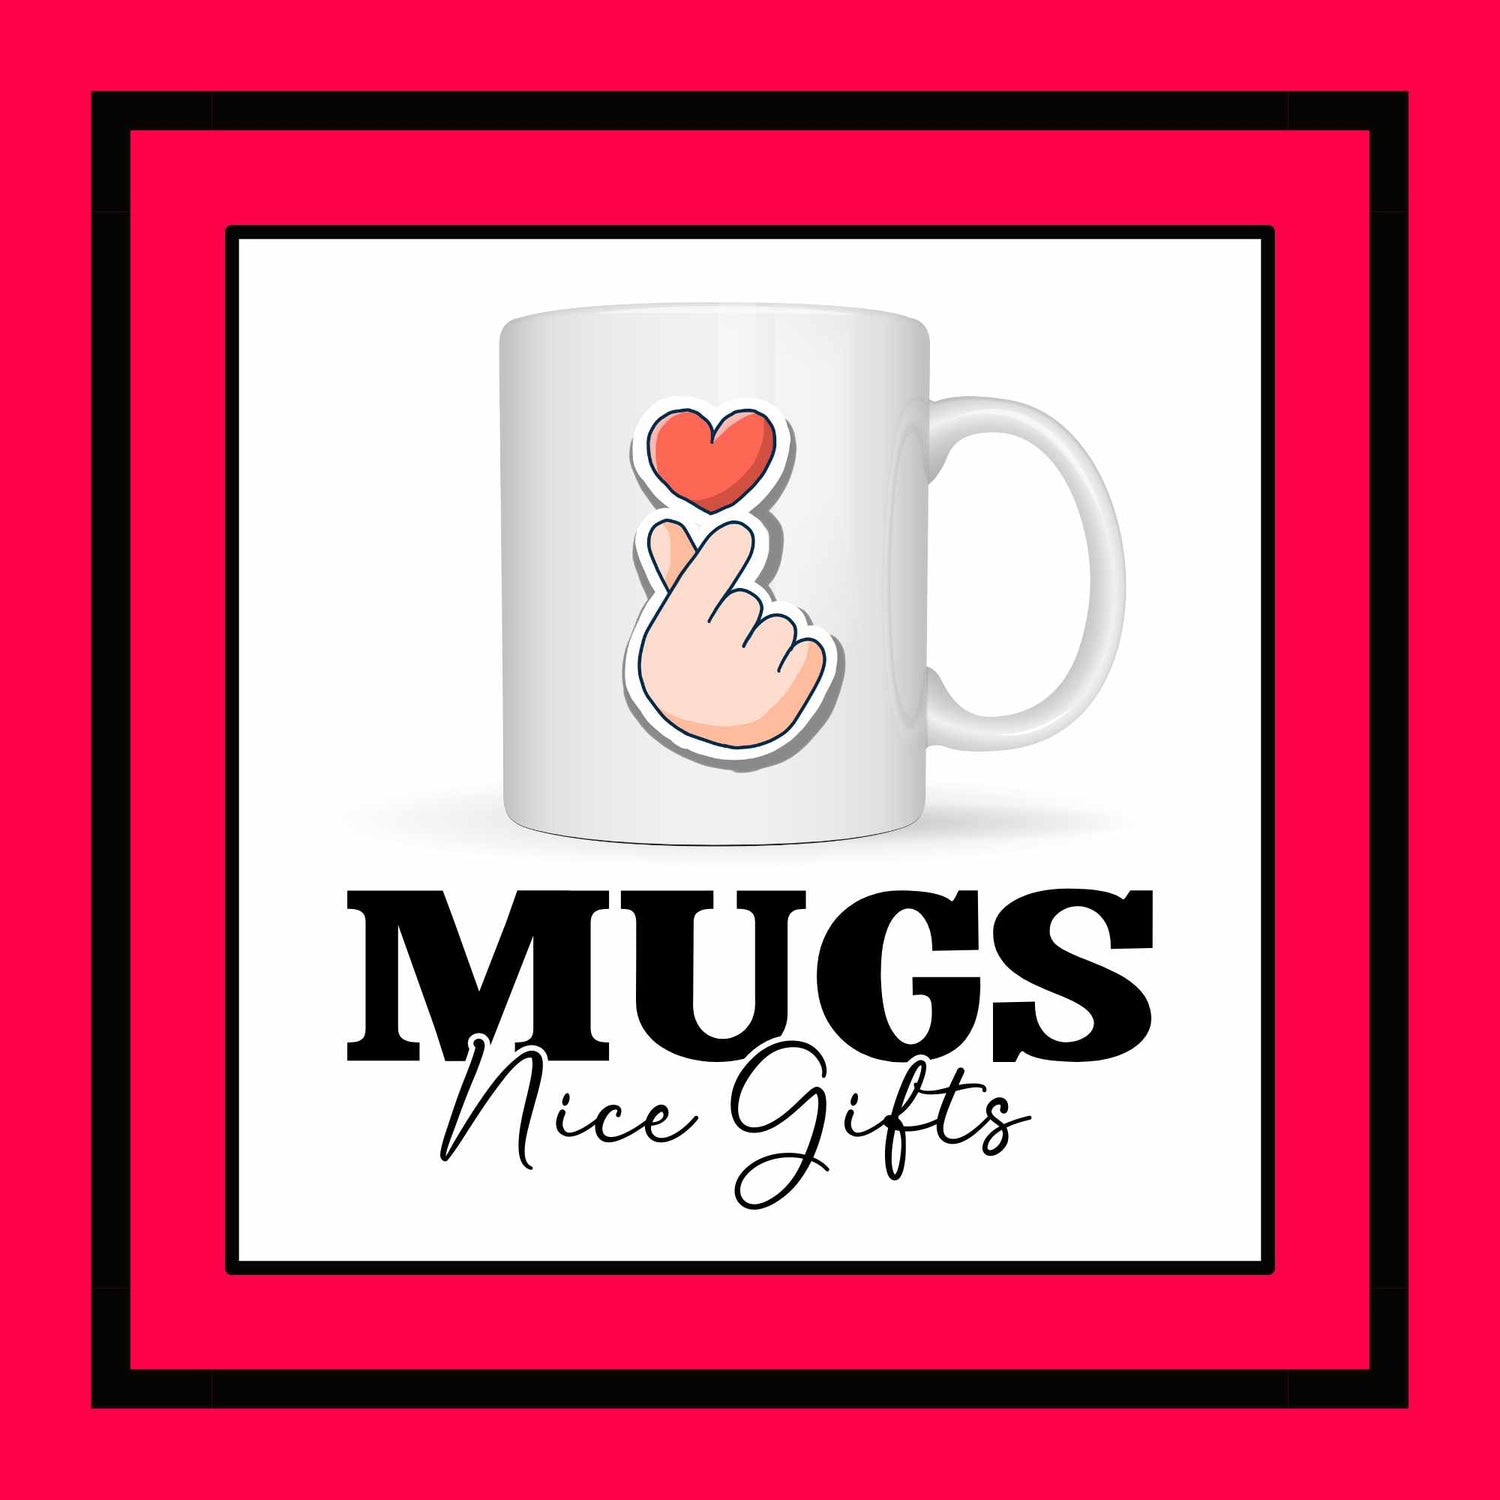 Mugs - Nice Gifts